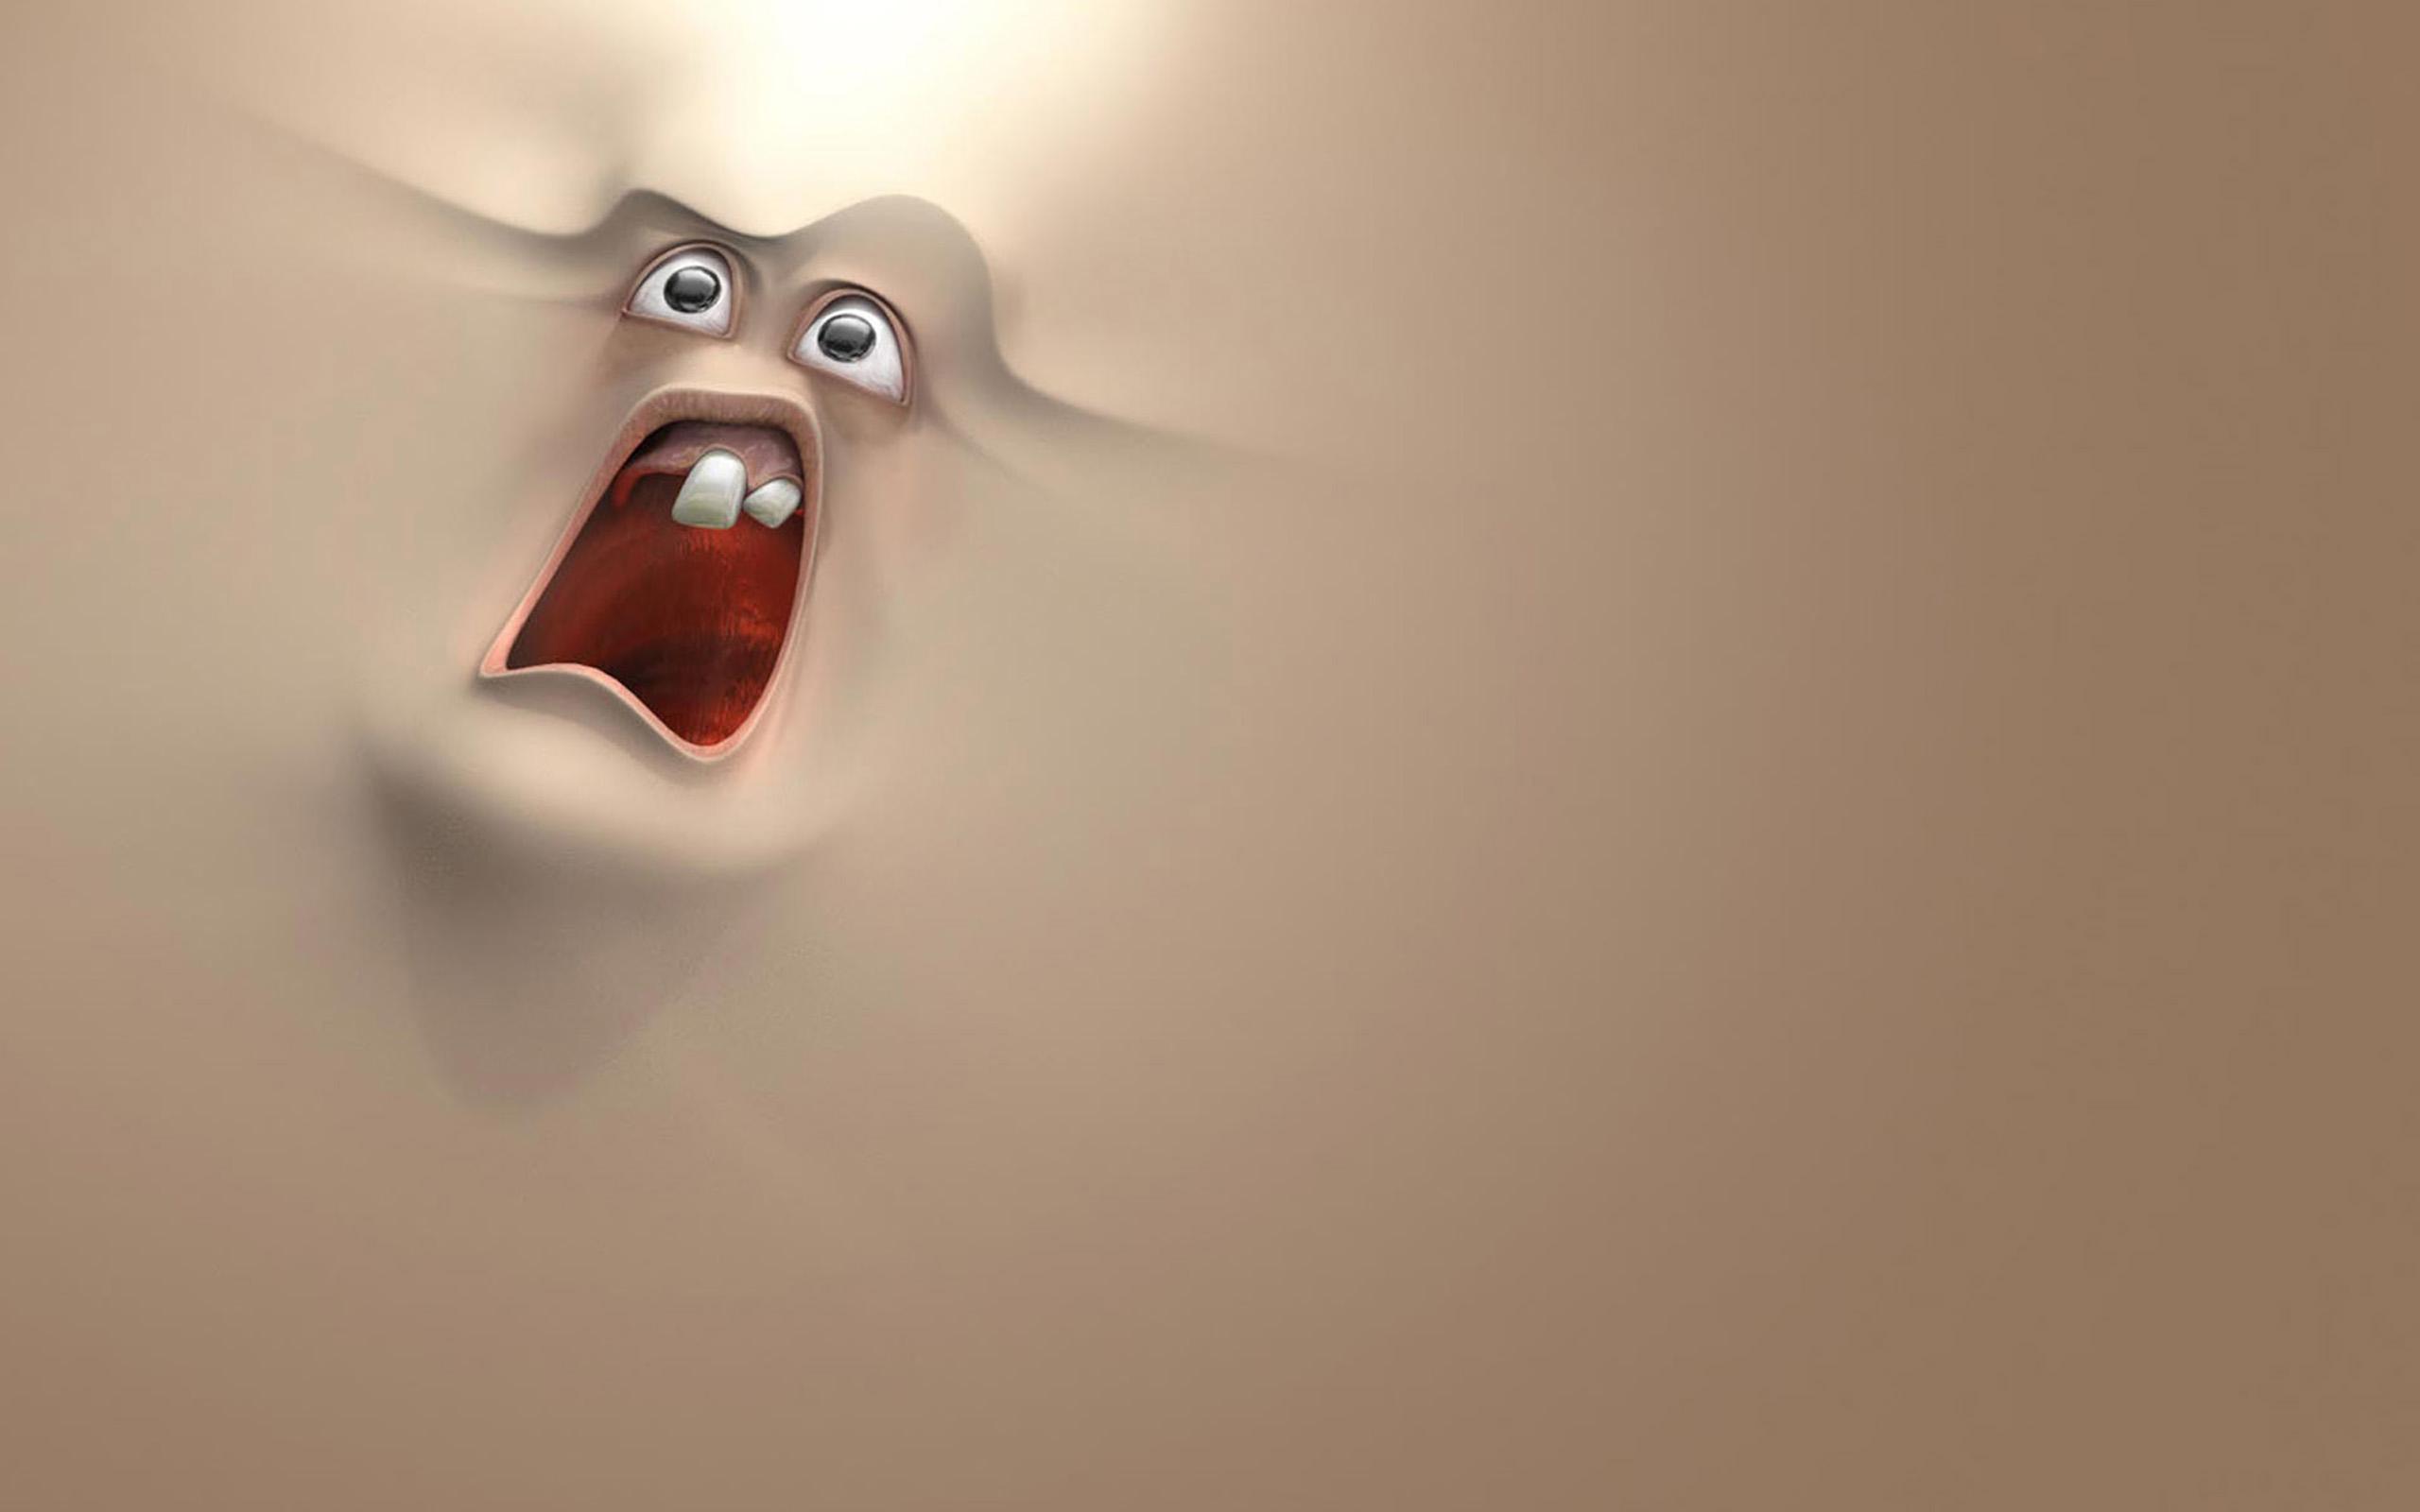 veryfunnywallpaper: Funny Face Cartoon 3D Animated Wallpaper